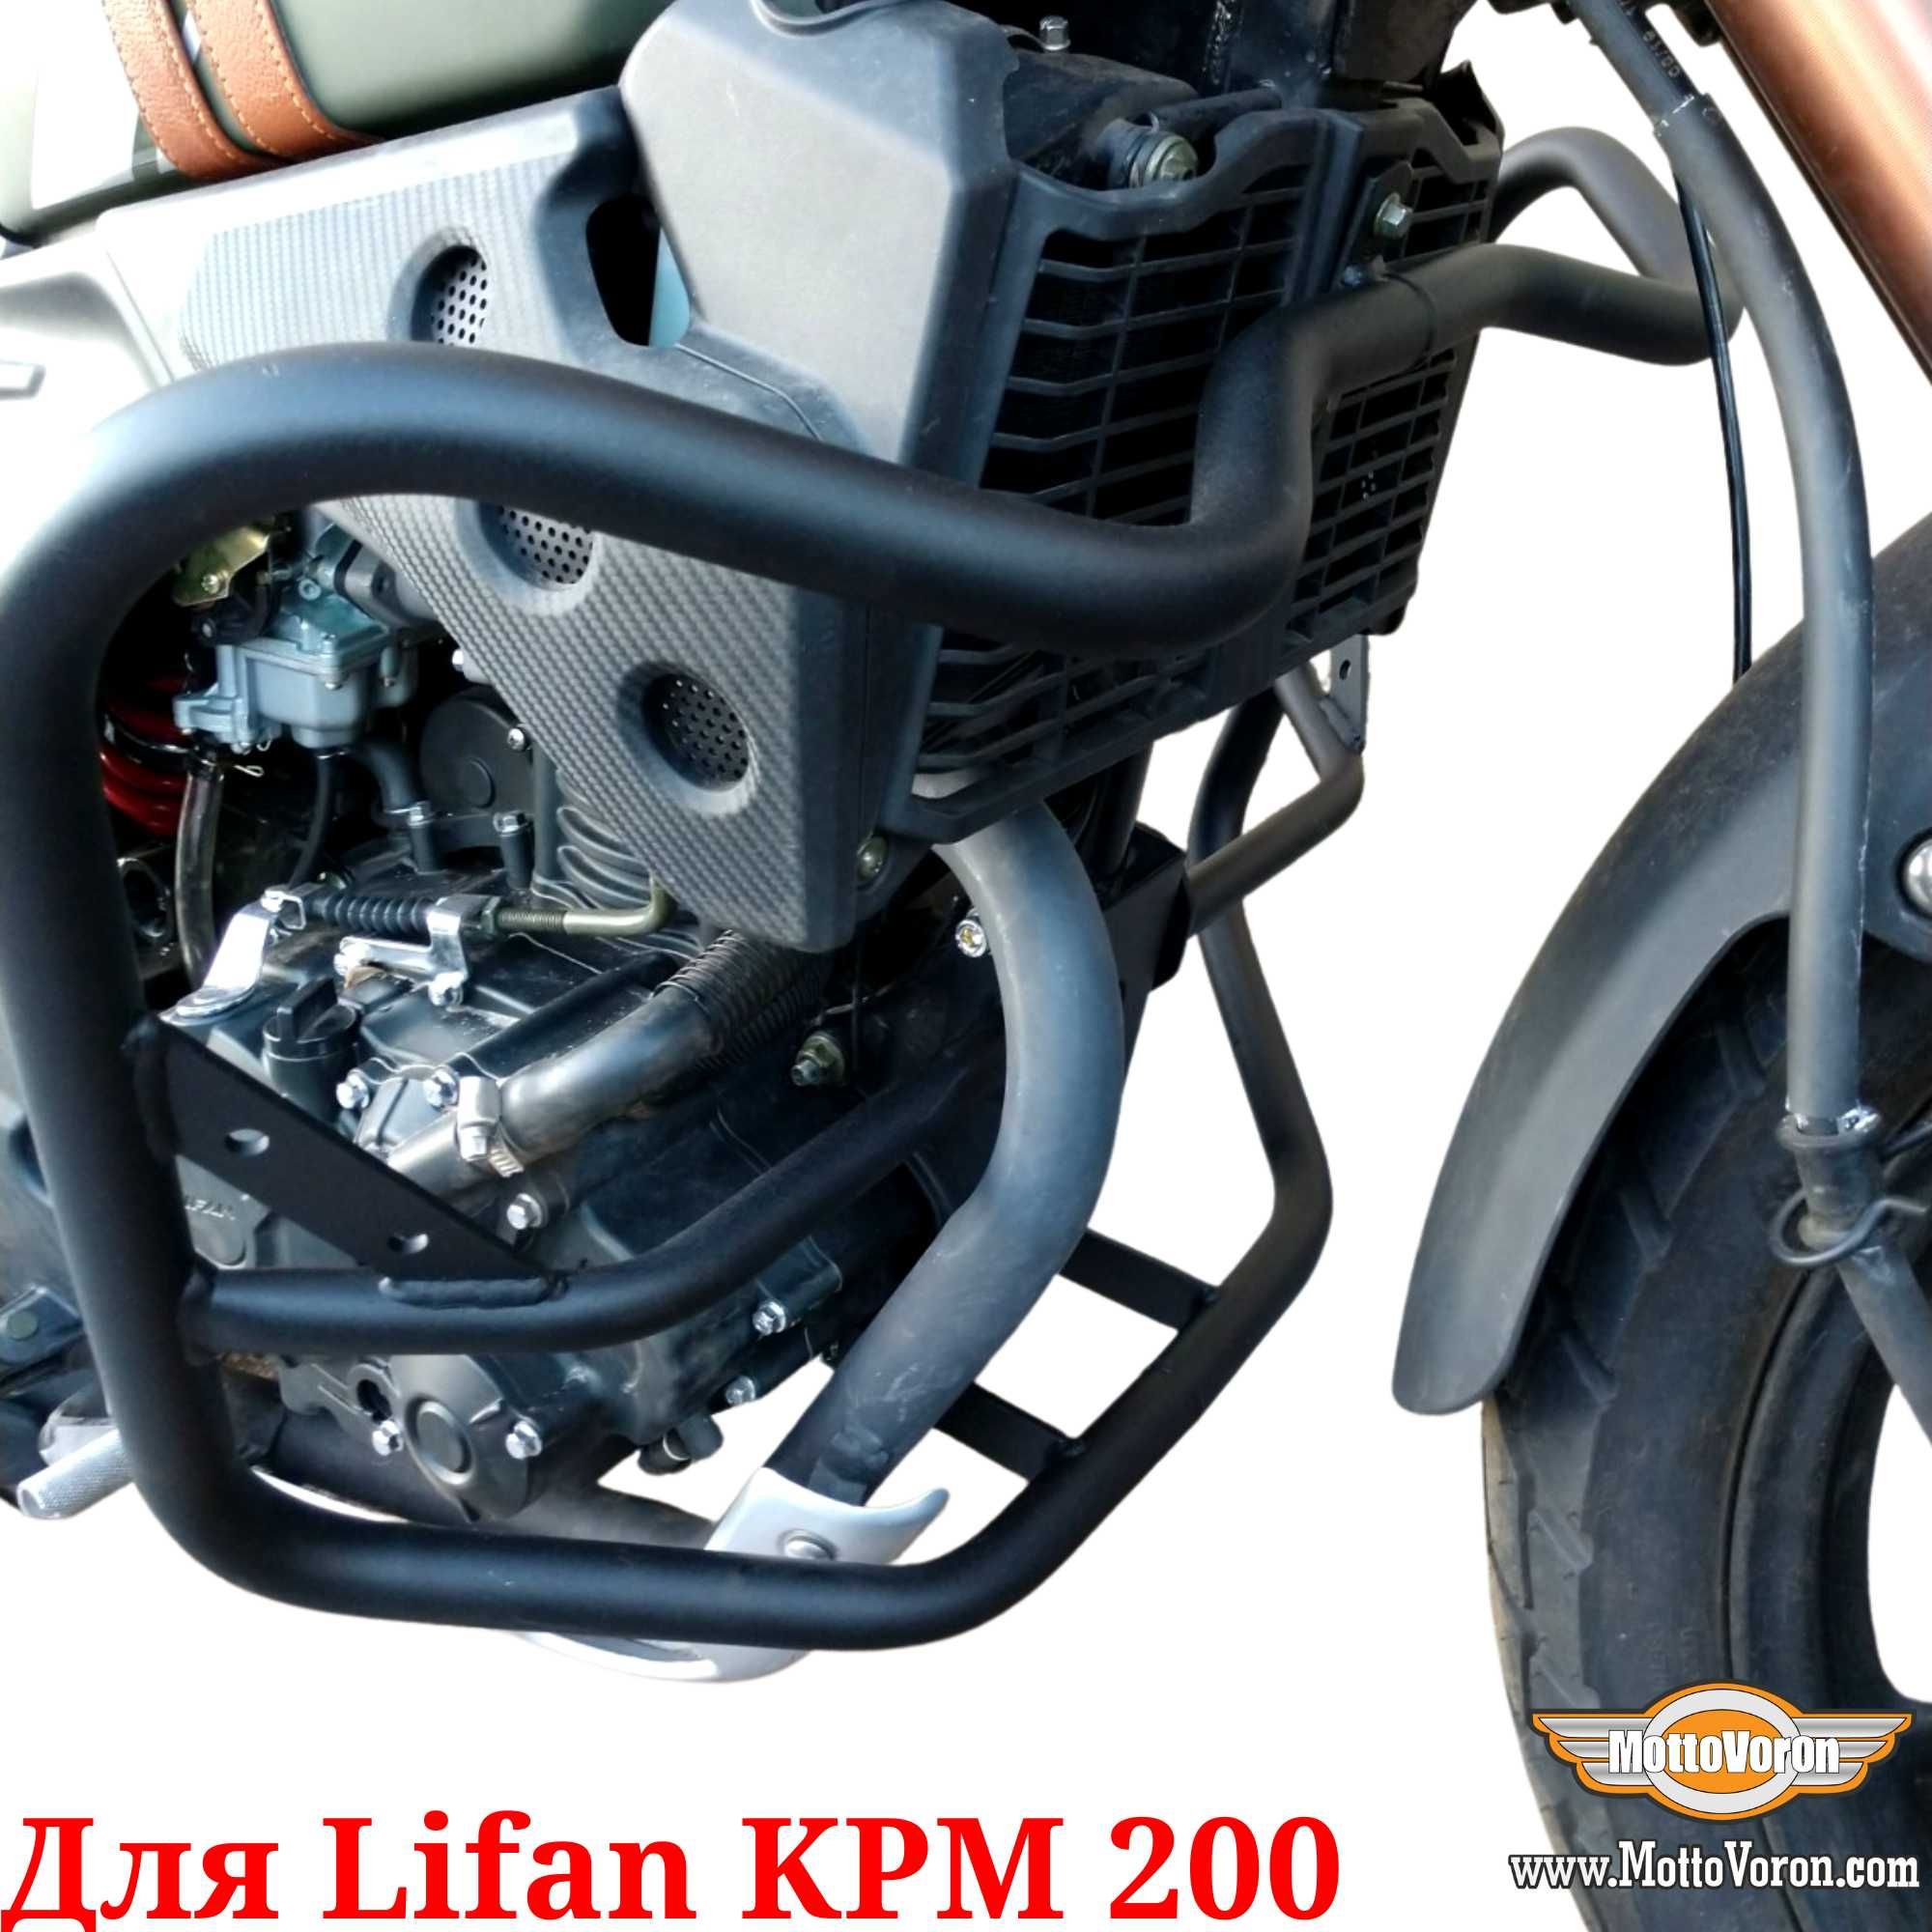 Lifan KPM 200 Защитные дуги Lifan KPM200 клетка защита обвес